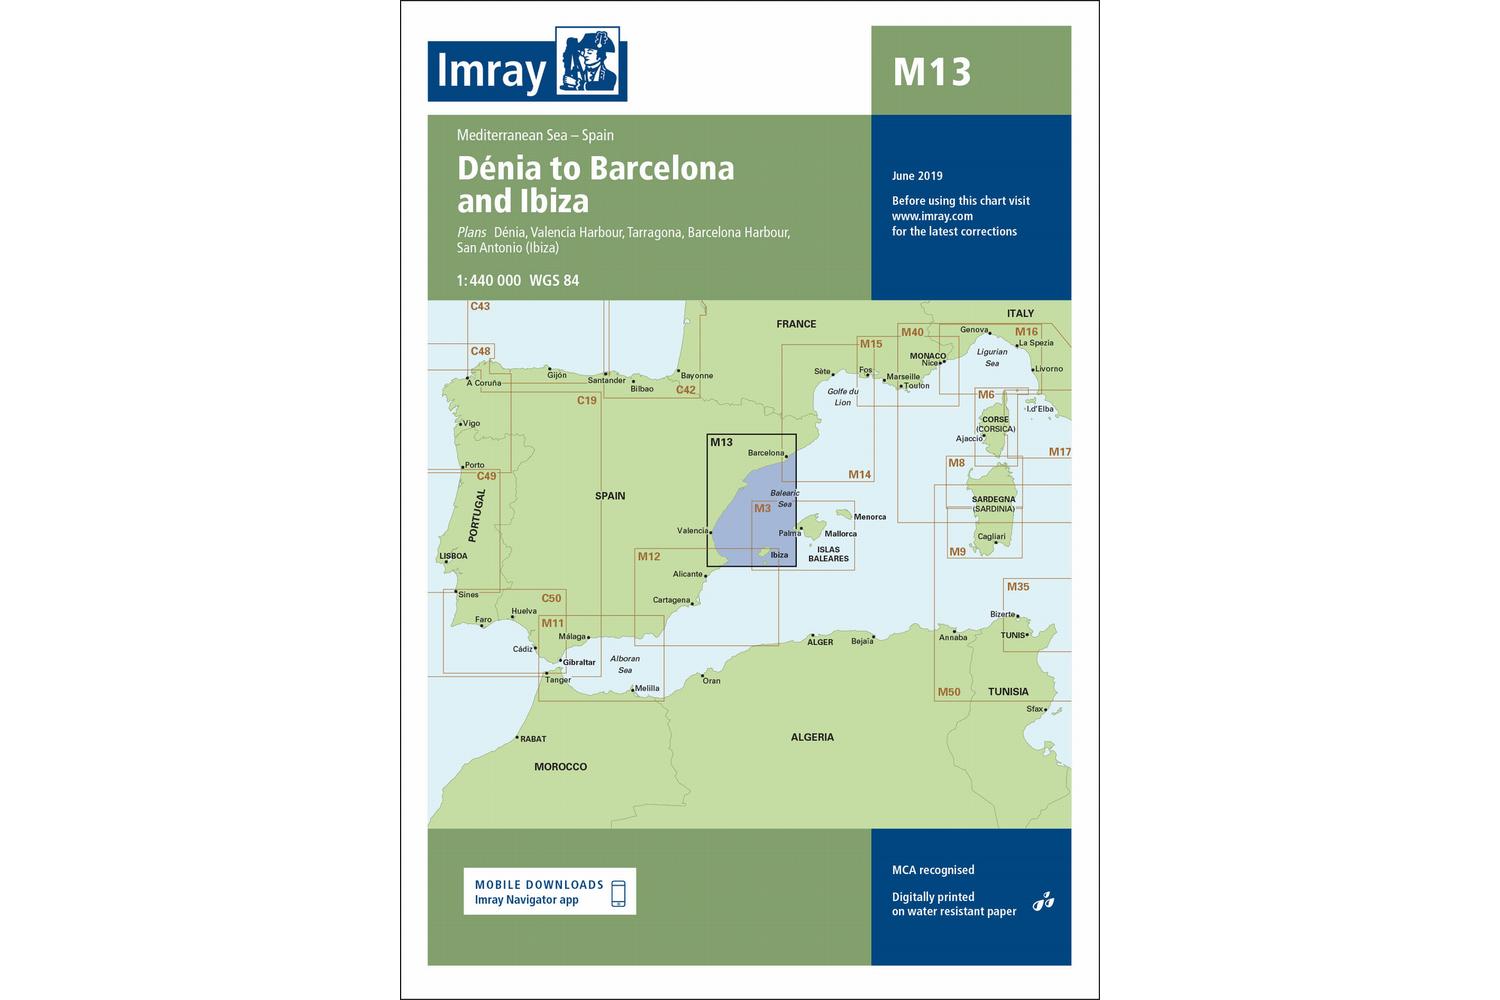 Imray - M13 COSTA DORADA - DENIA TO BARCELONA